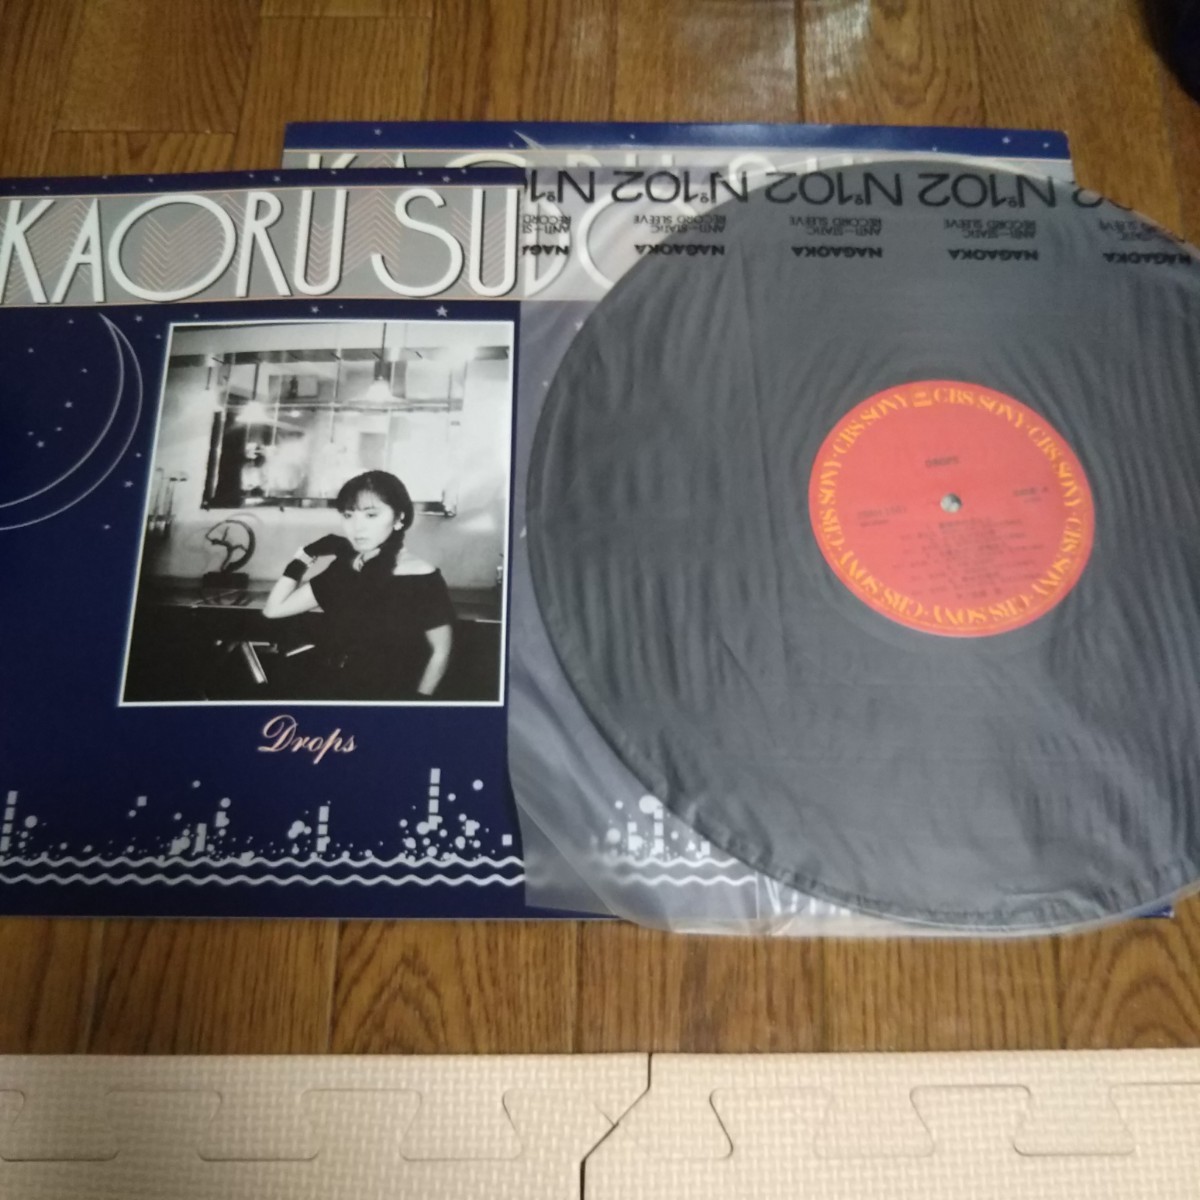  analogue LP record [ Sudo Kaoru Drops( Drop s)]